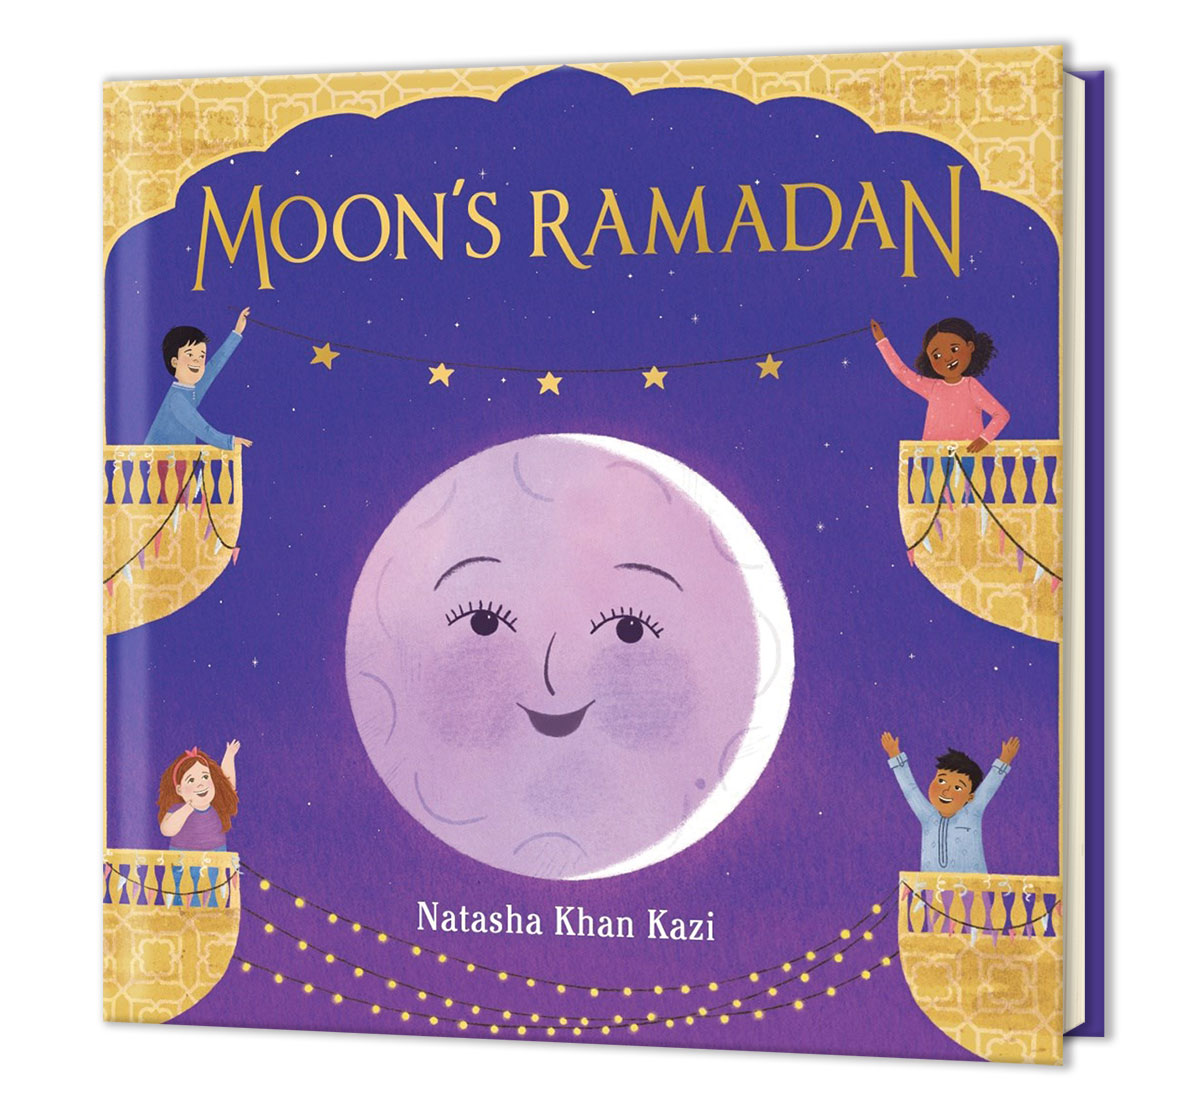  Moon's Ramadan 